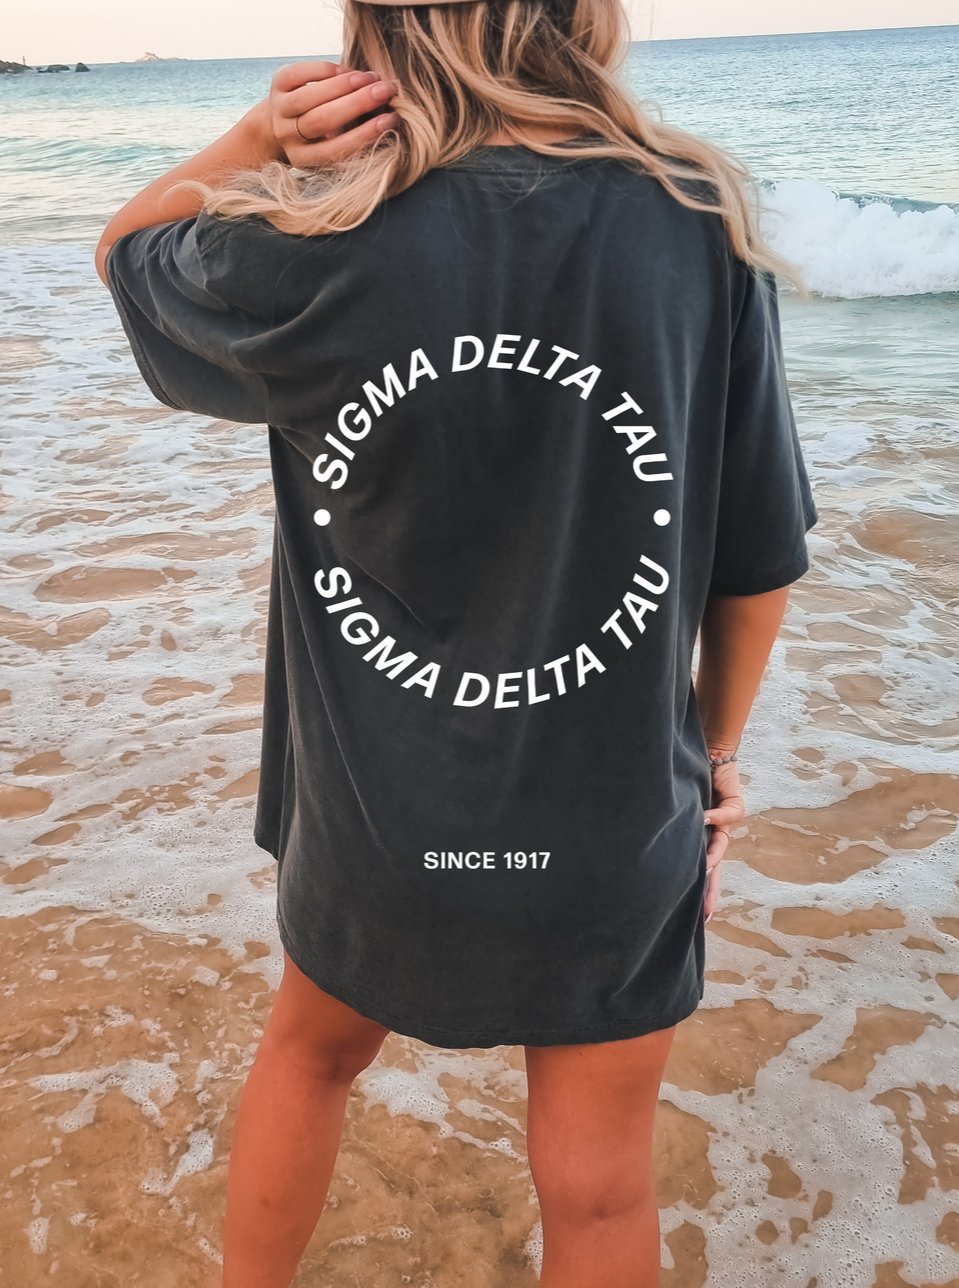 Sigma Delta Tau Simple Circle Sorority T-shirt